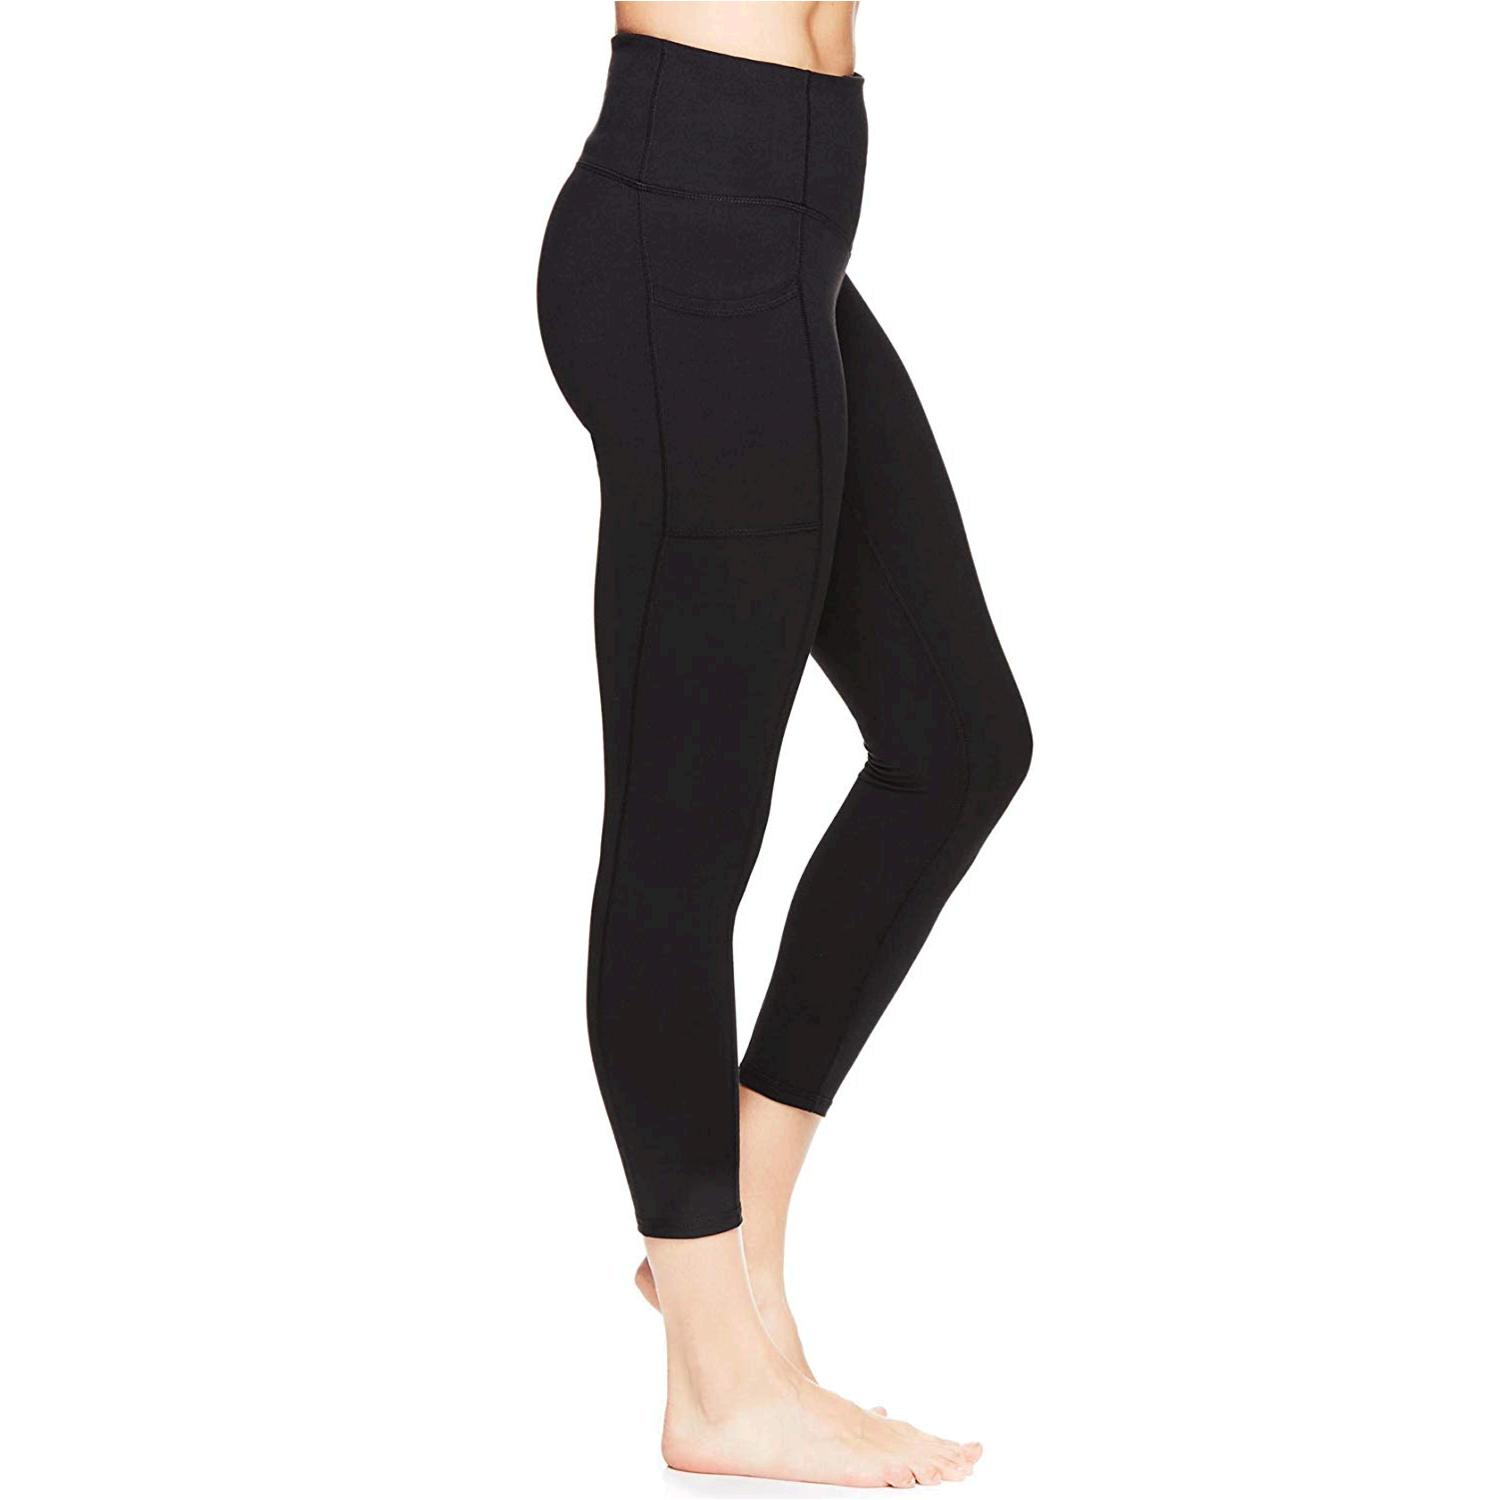 Gaiam Women's Capri Yoga Pants - Performance Spandex Compression Legging 